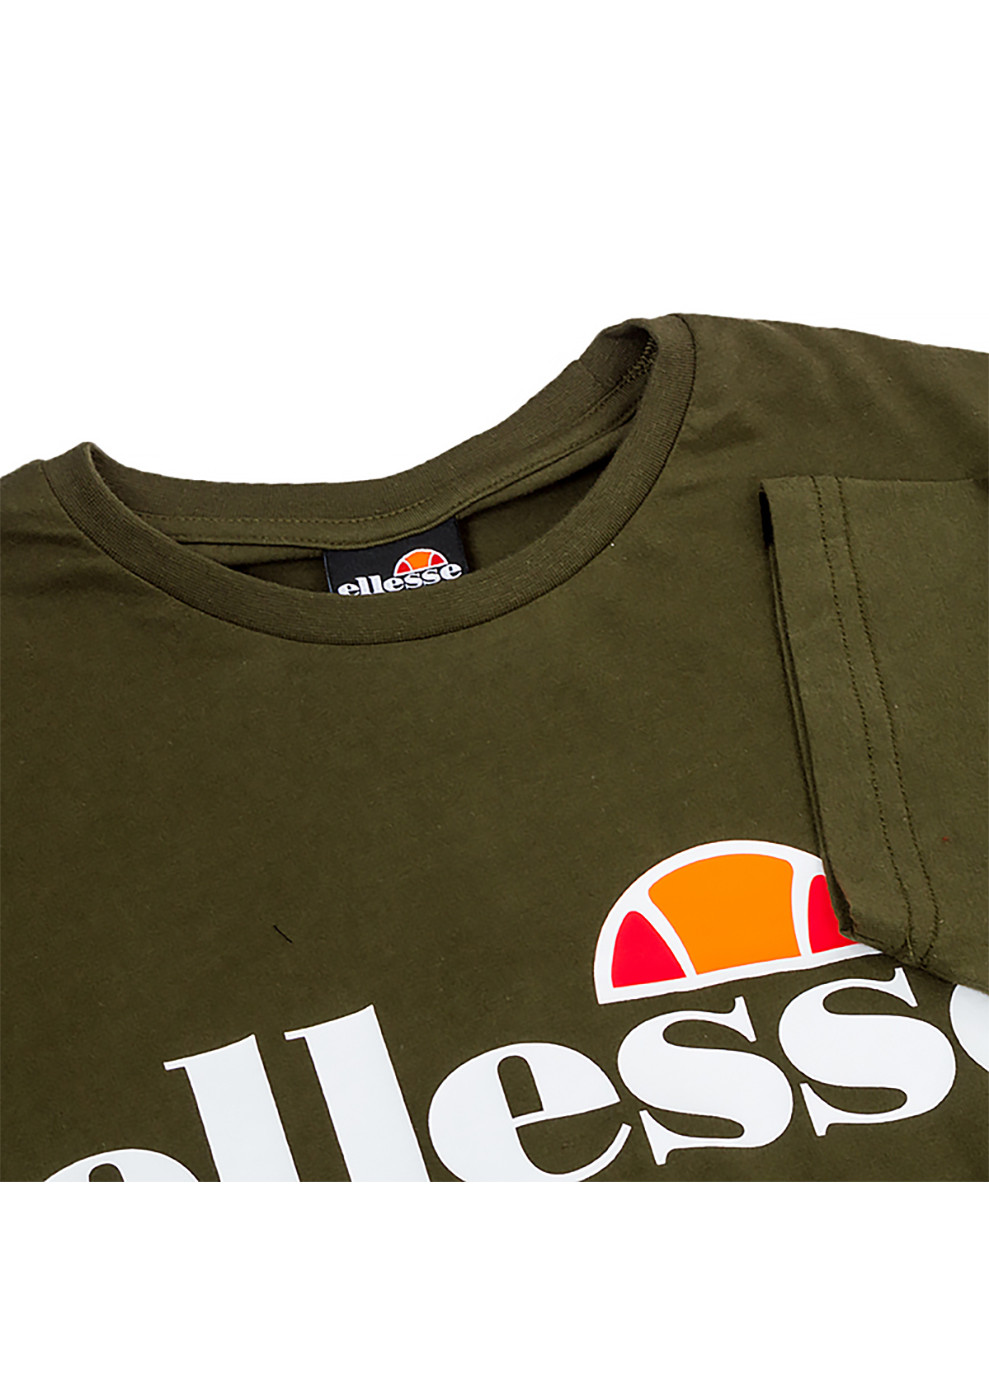 Хаки (оливковая) мужская футболка sl prado хаки s (shc07405-khaki s) Ellesse